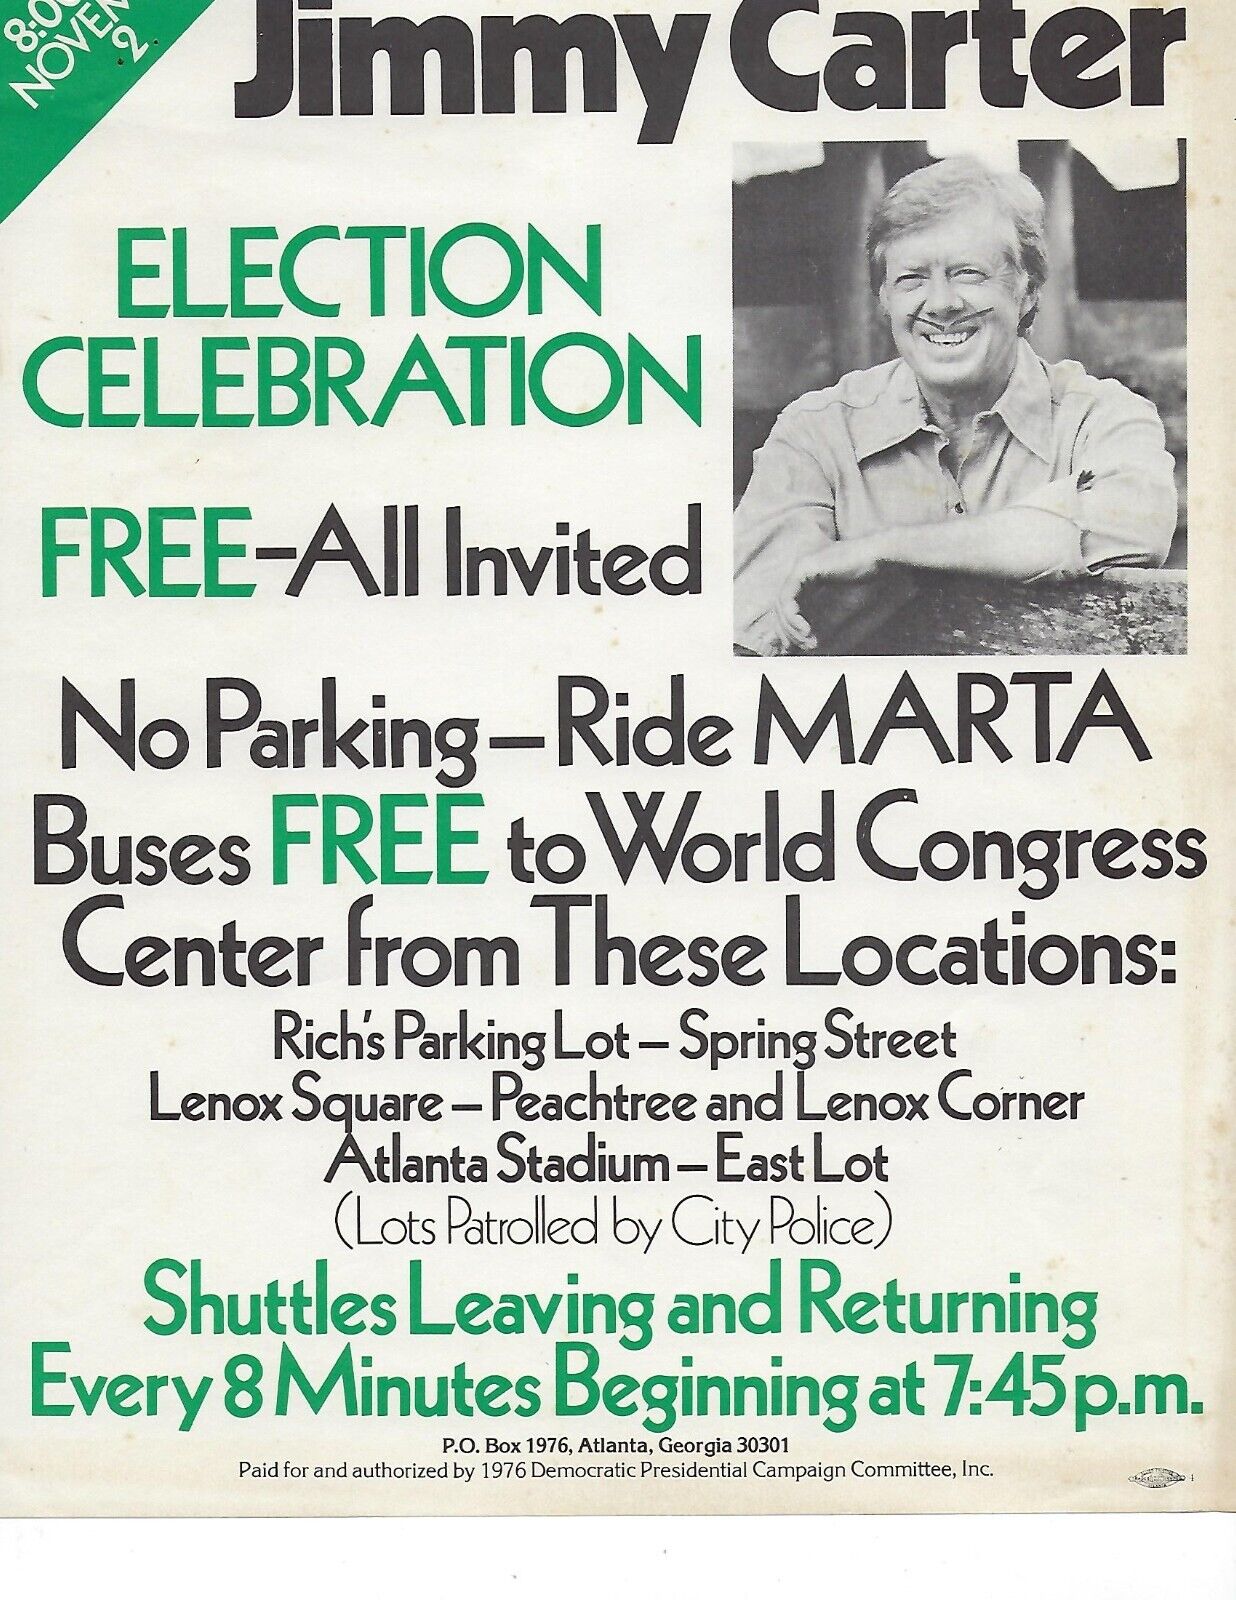 Jimmy Carter for President, 1976 Election Celebration